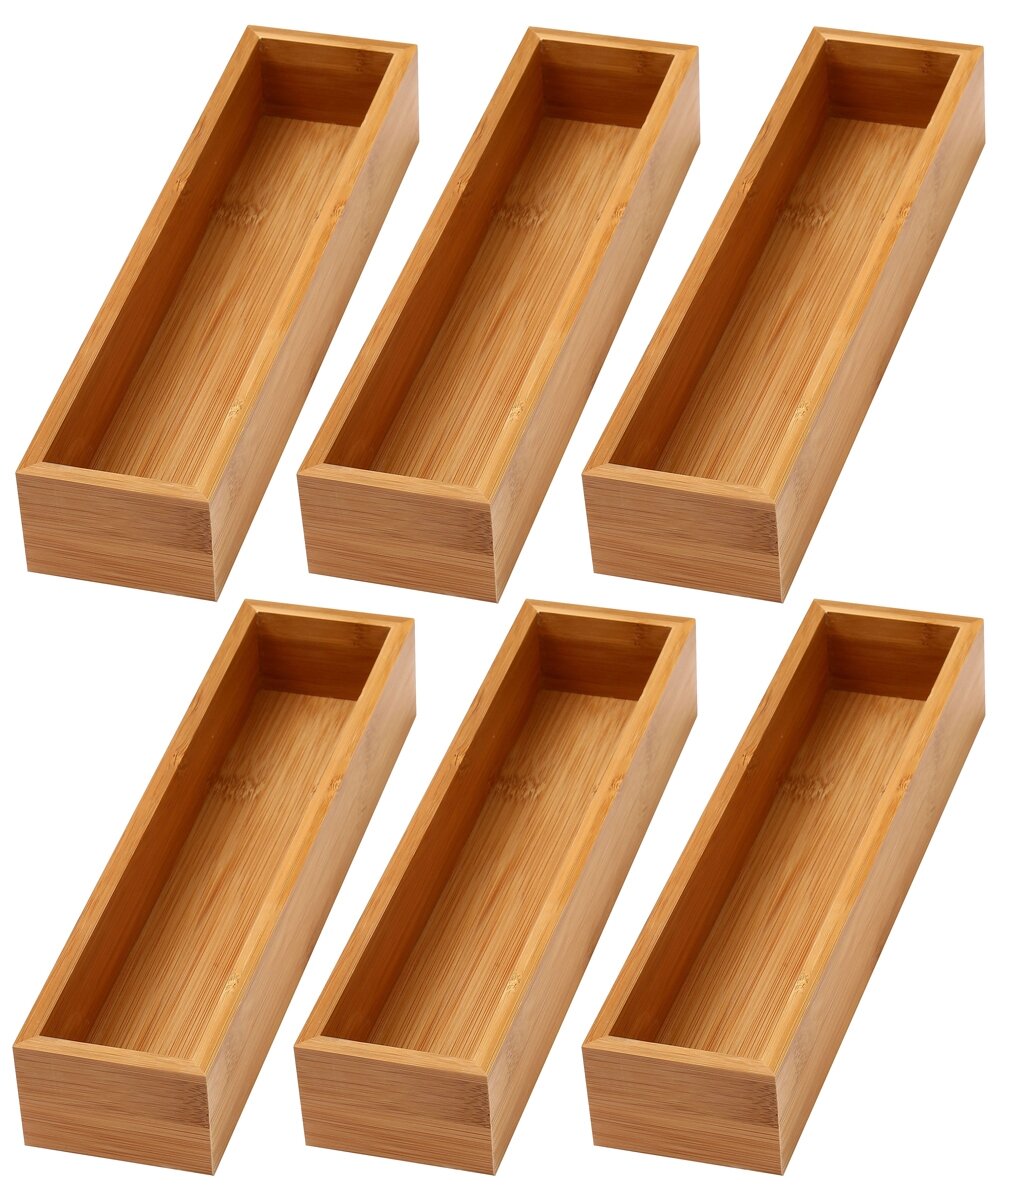 Rebrilliant Drawer Organizer Bamboo Storage Box - Kitchen Bathroom Desk  Wood Stackable Tray 9X6x2.5Inch & Reviews